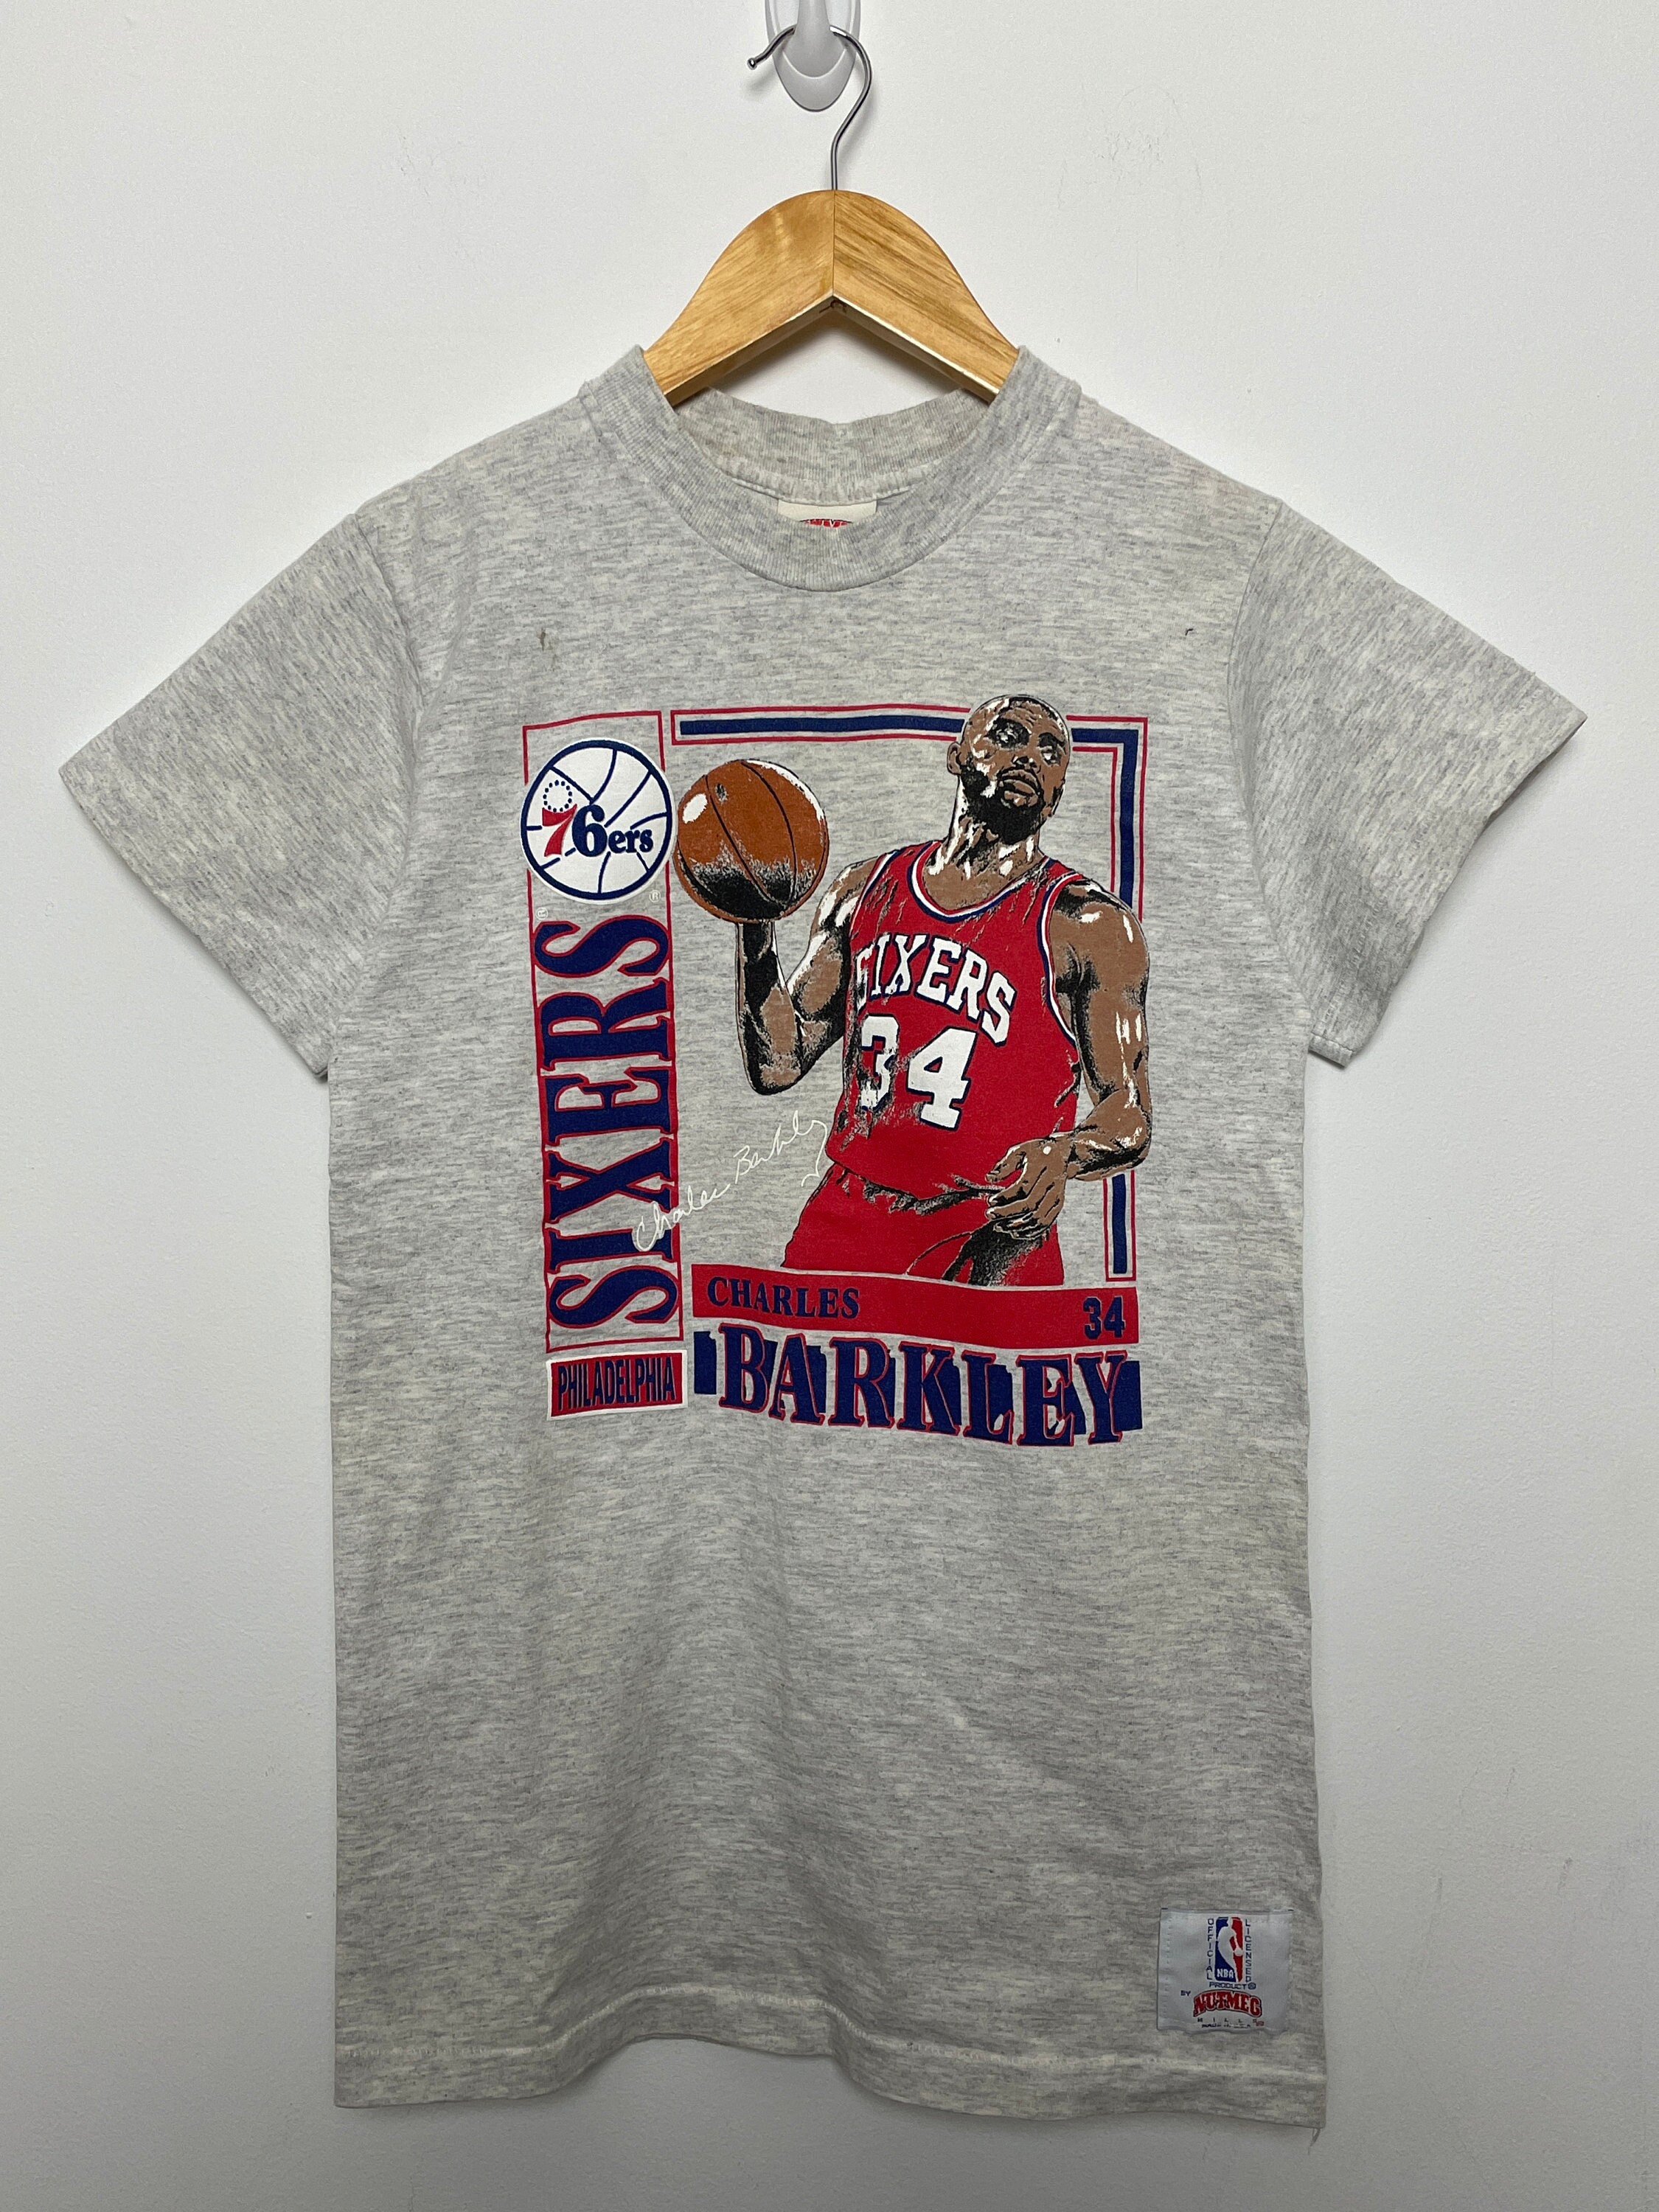 Vintage Classic Design Philadelphia 76ers NBA Basketball Unisex T